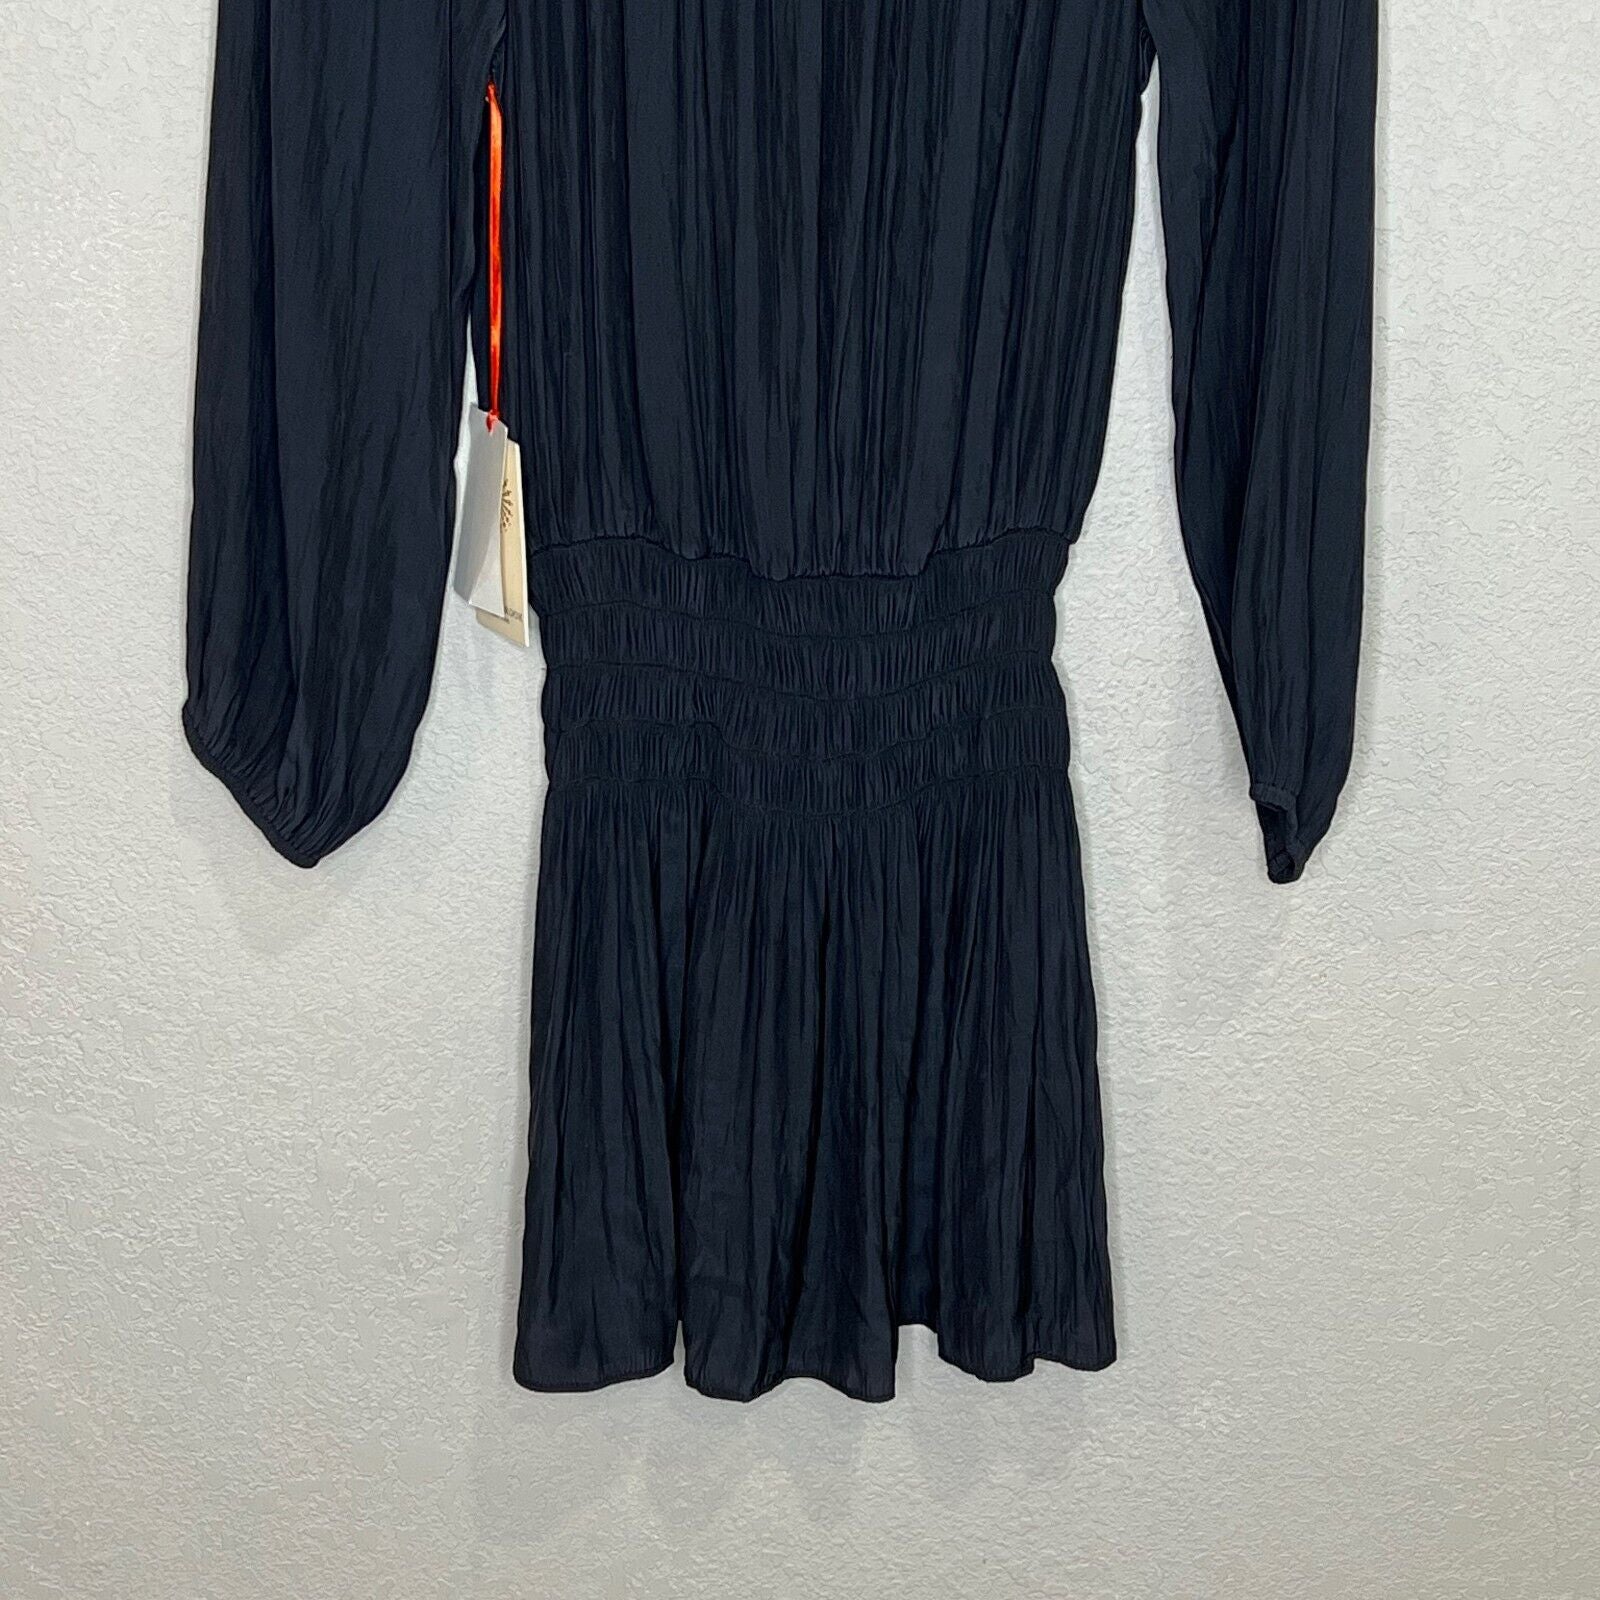 Ramy Brook Black Chloe Mini Dress Size Small NEW $445